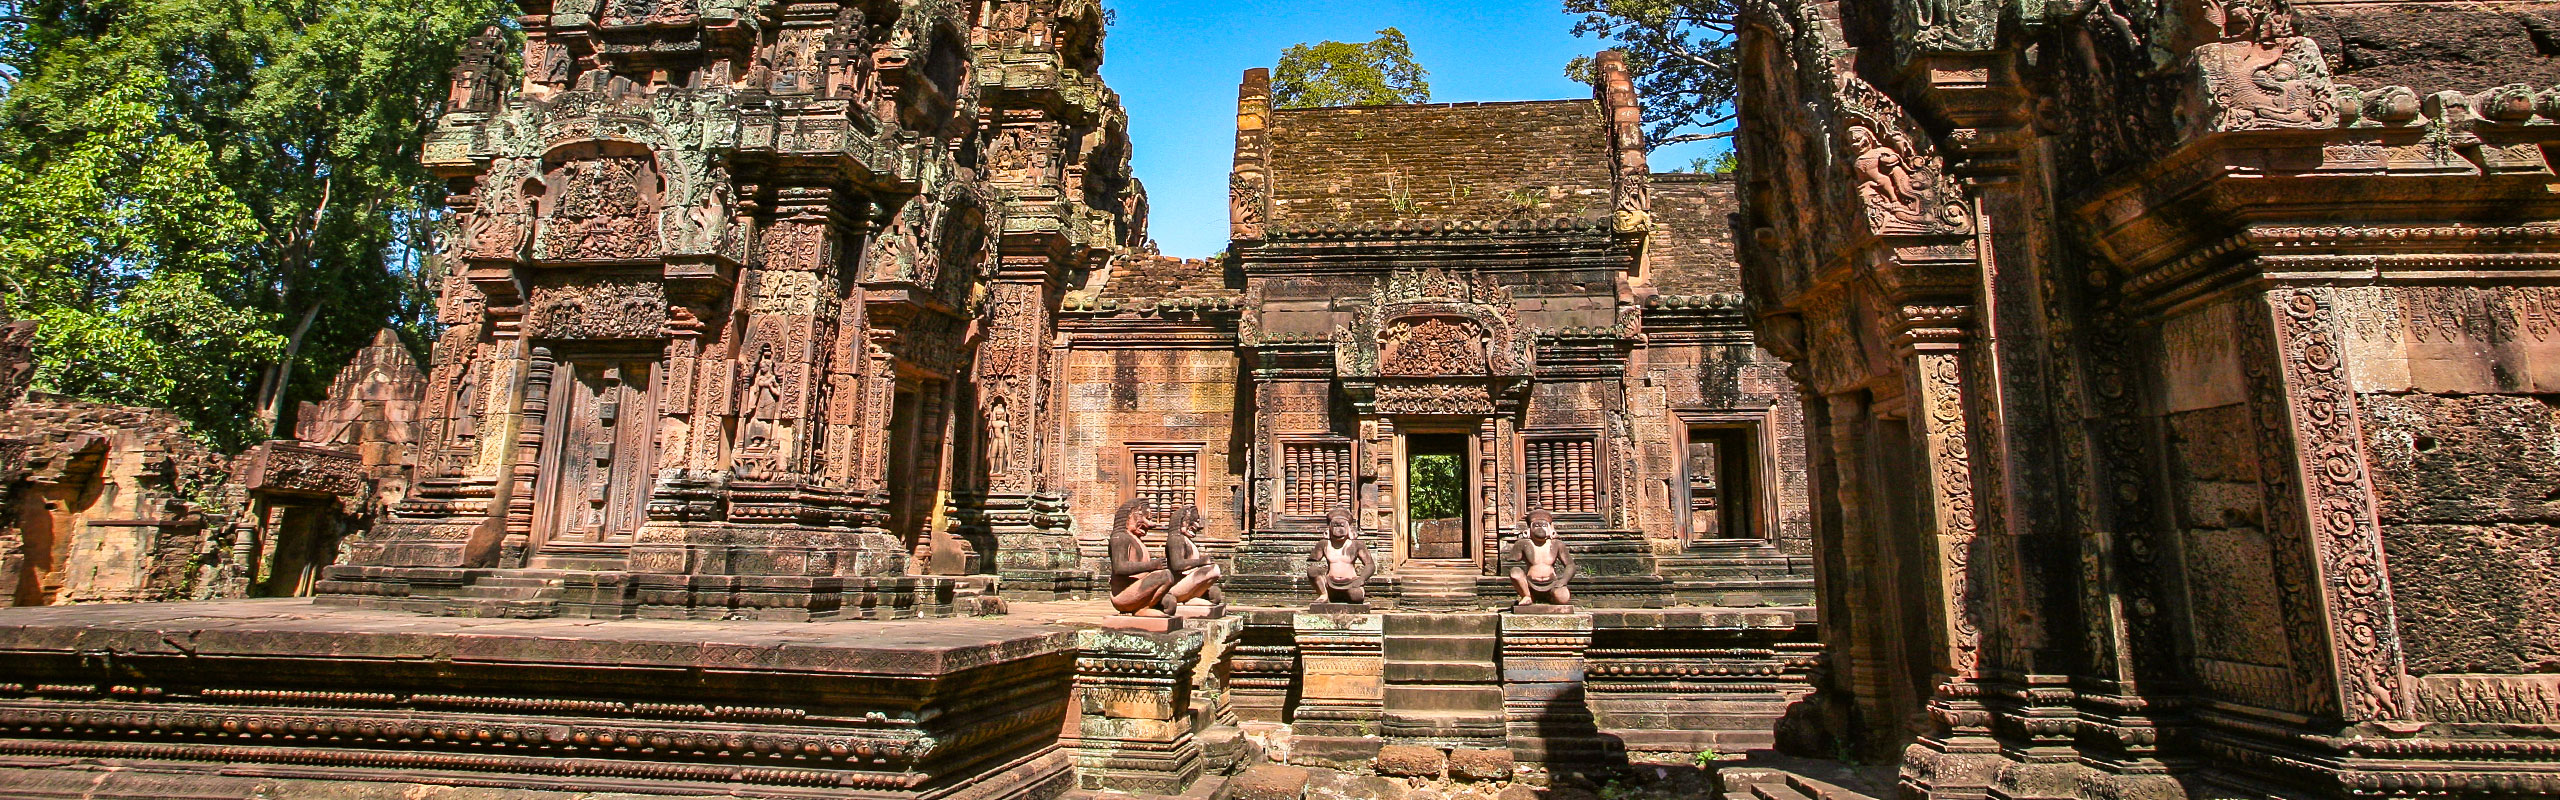 Banteay Srei Temple, Siem Reap